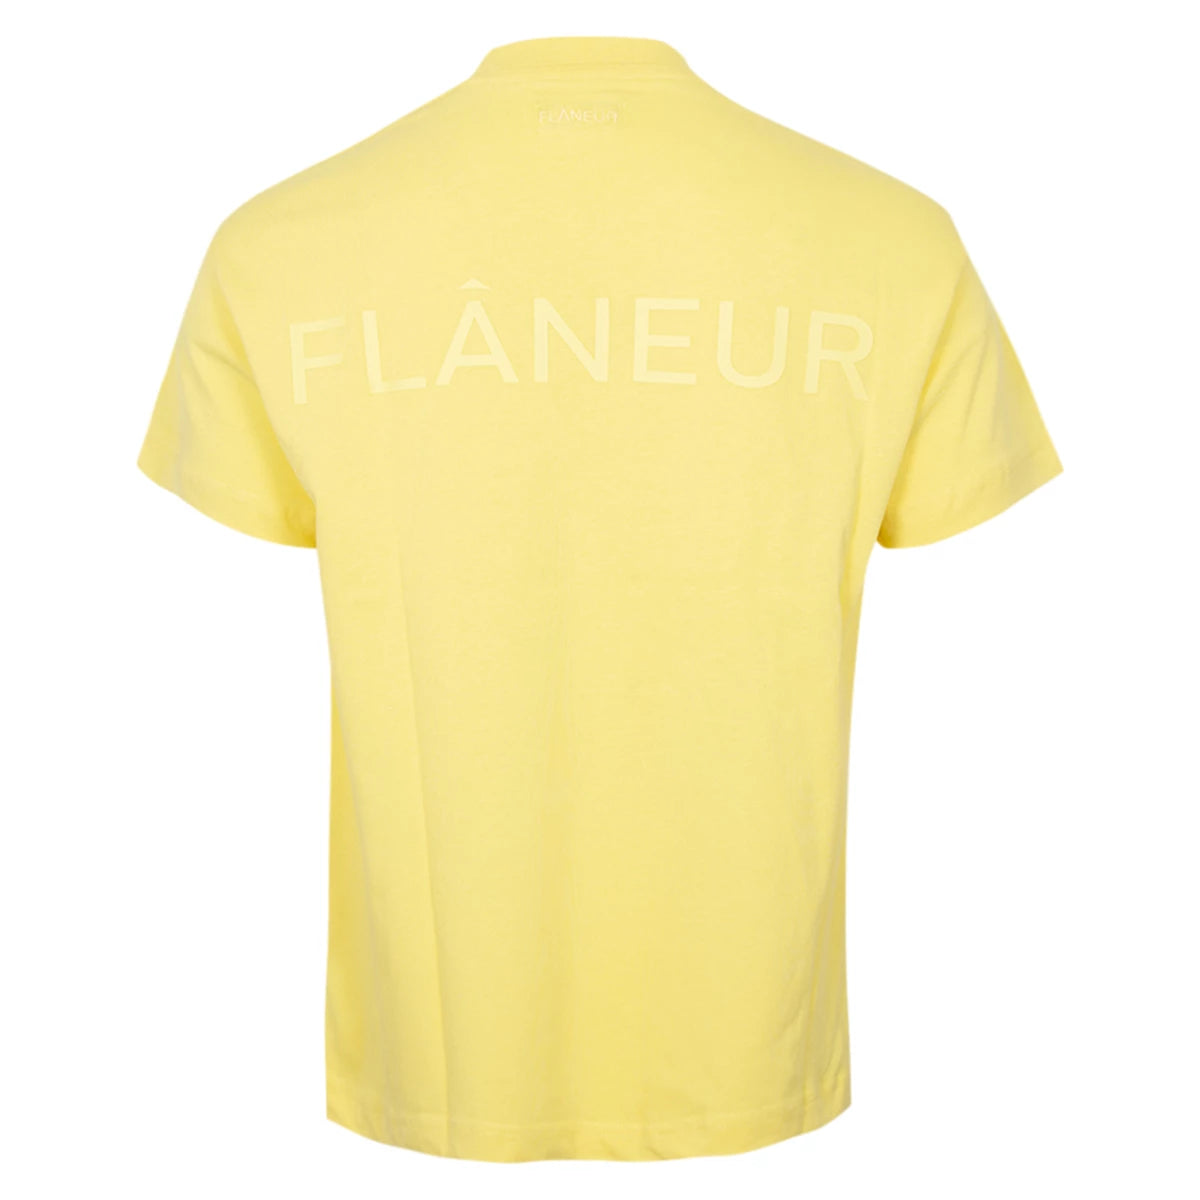 Flaneur T-shirt geel | Tonal logo shirt